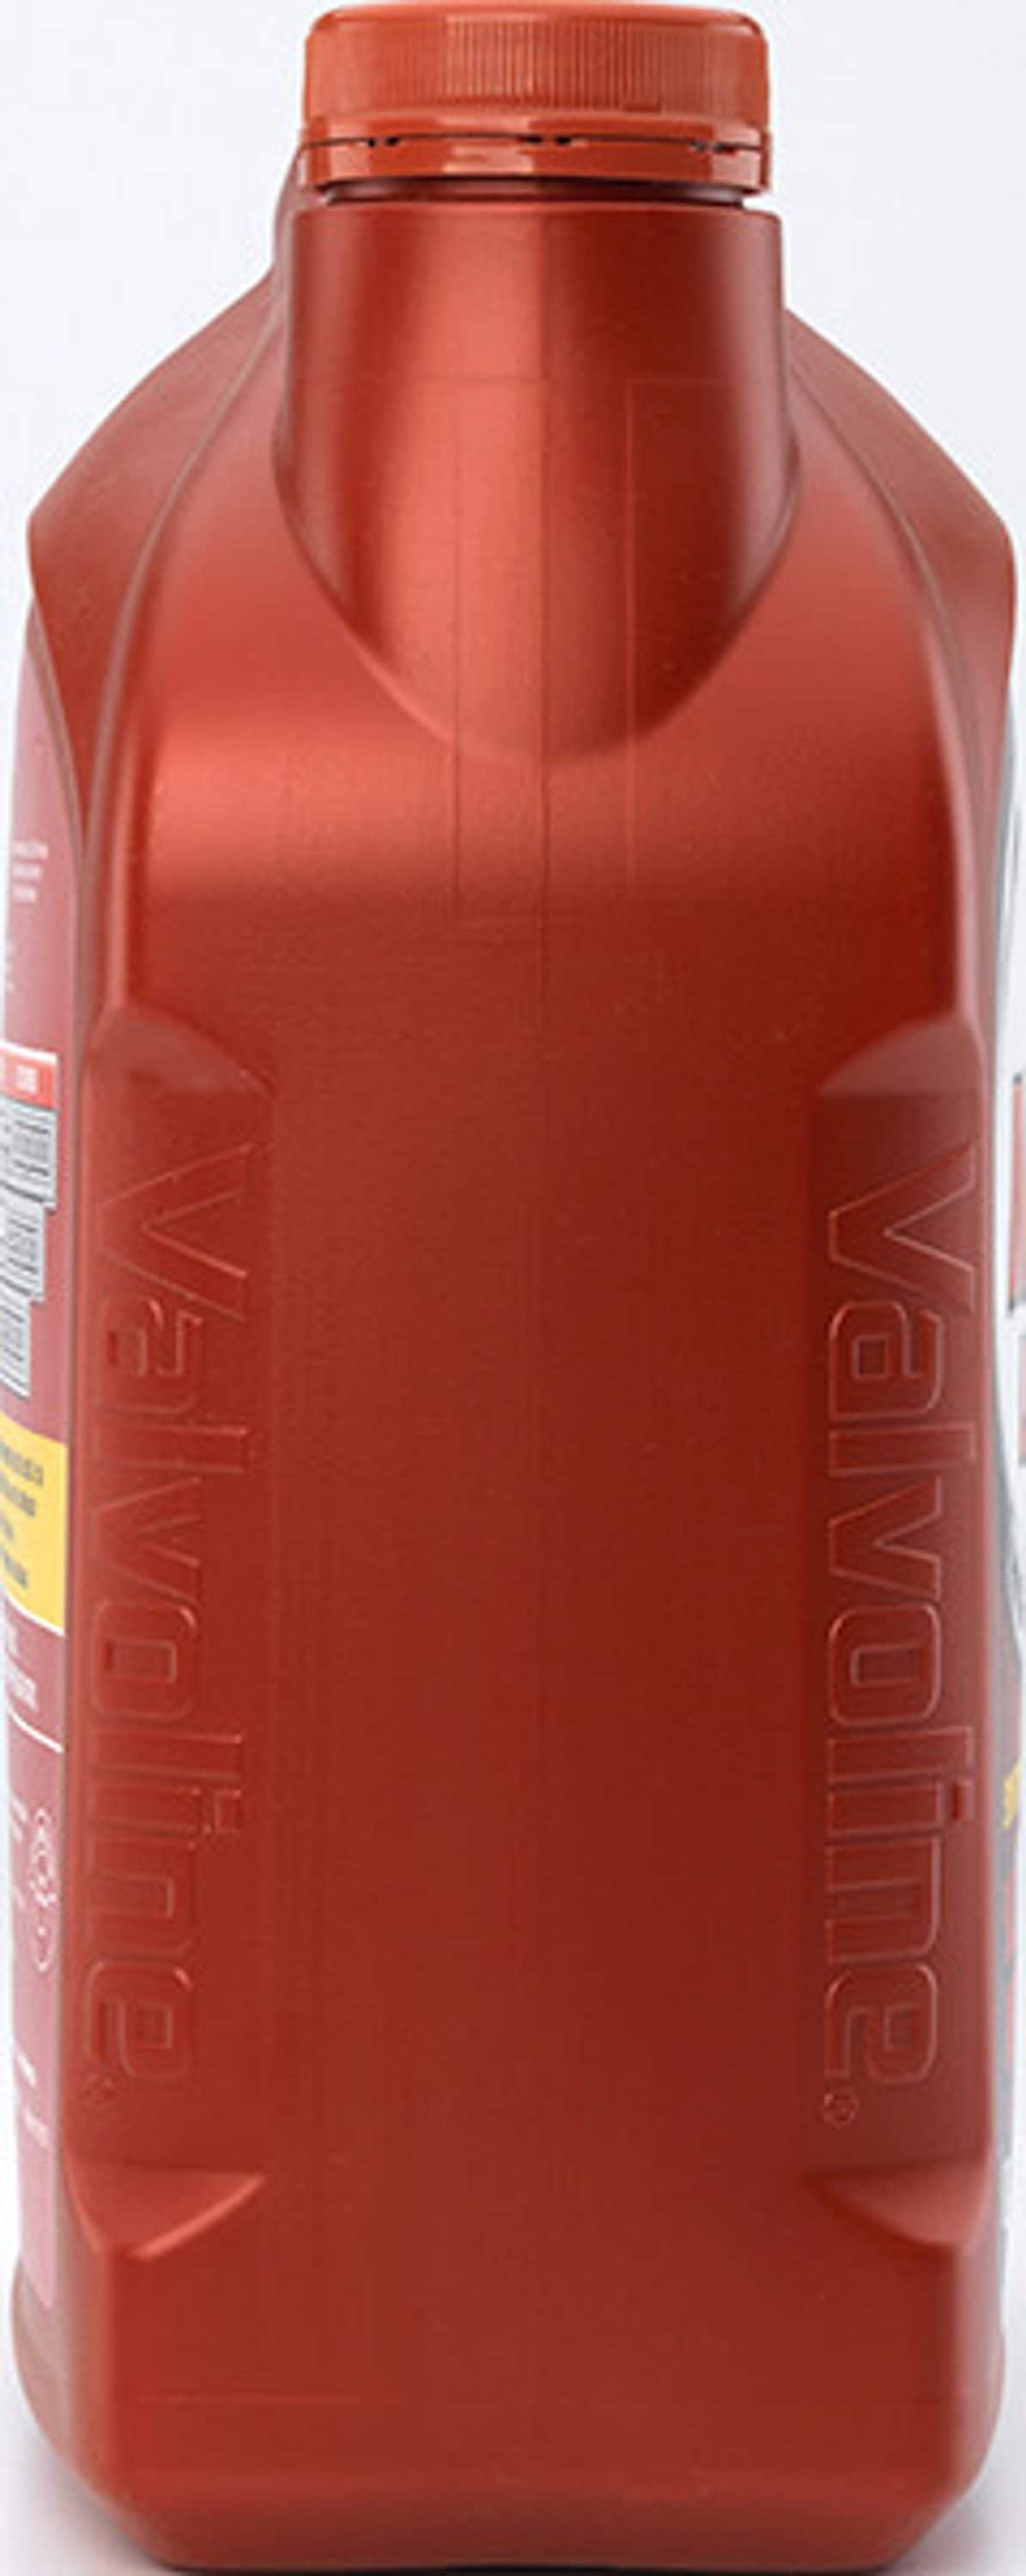 Valvoline ATF DEXRON VI/MERCON LV - 1 Gallon